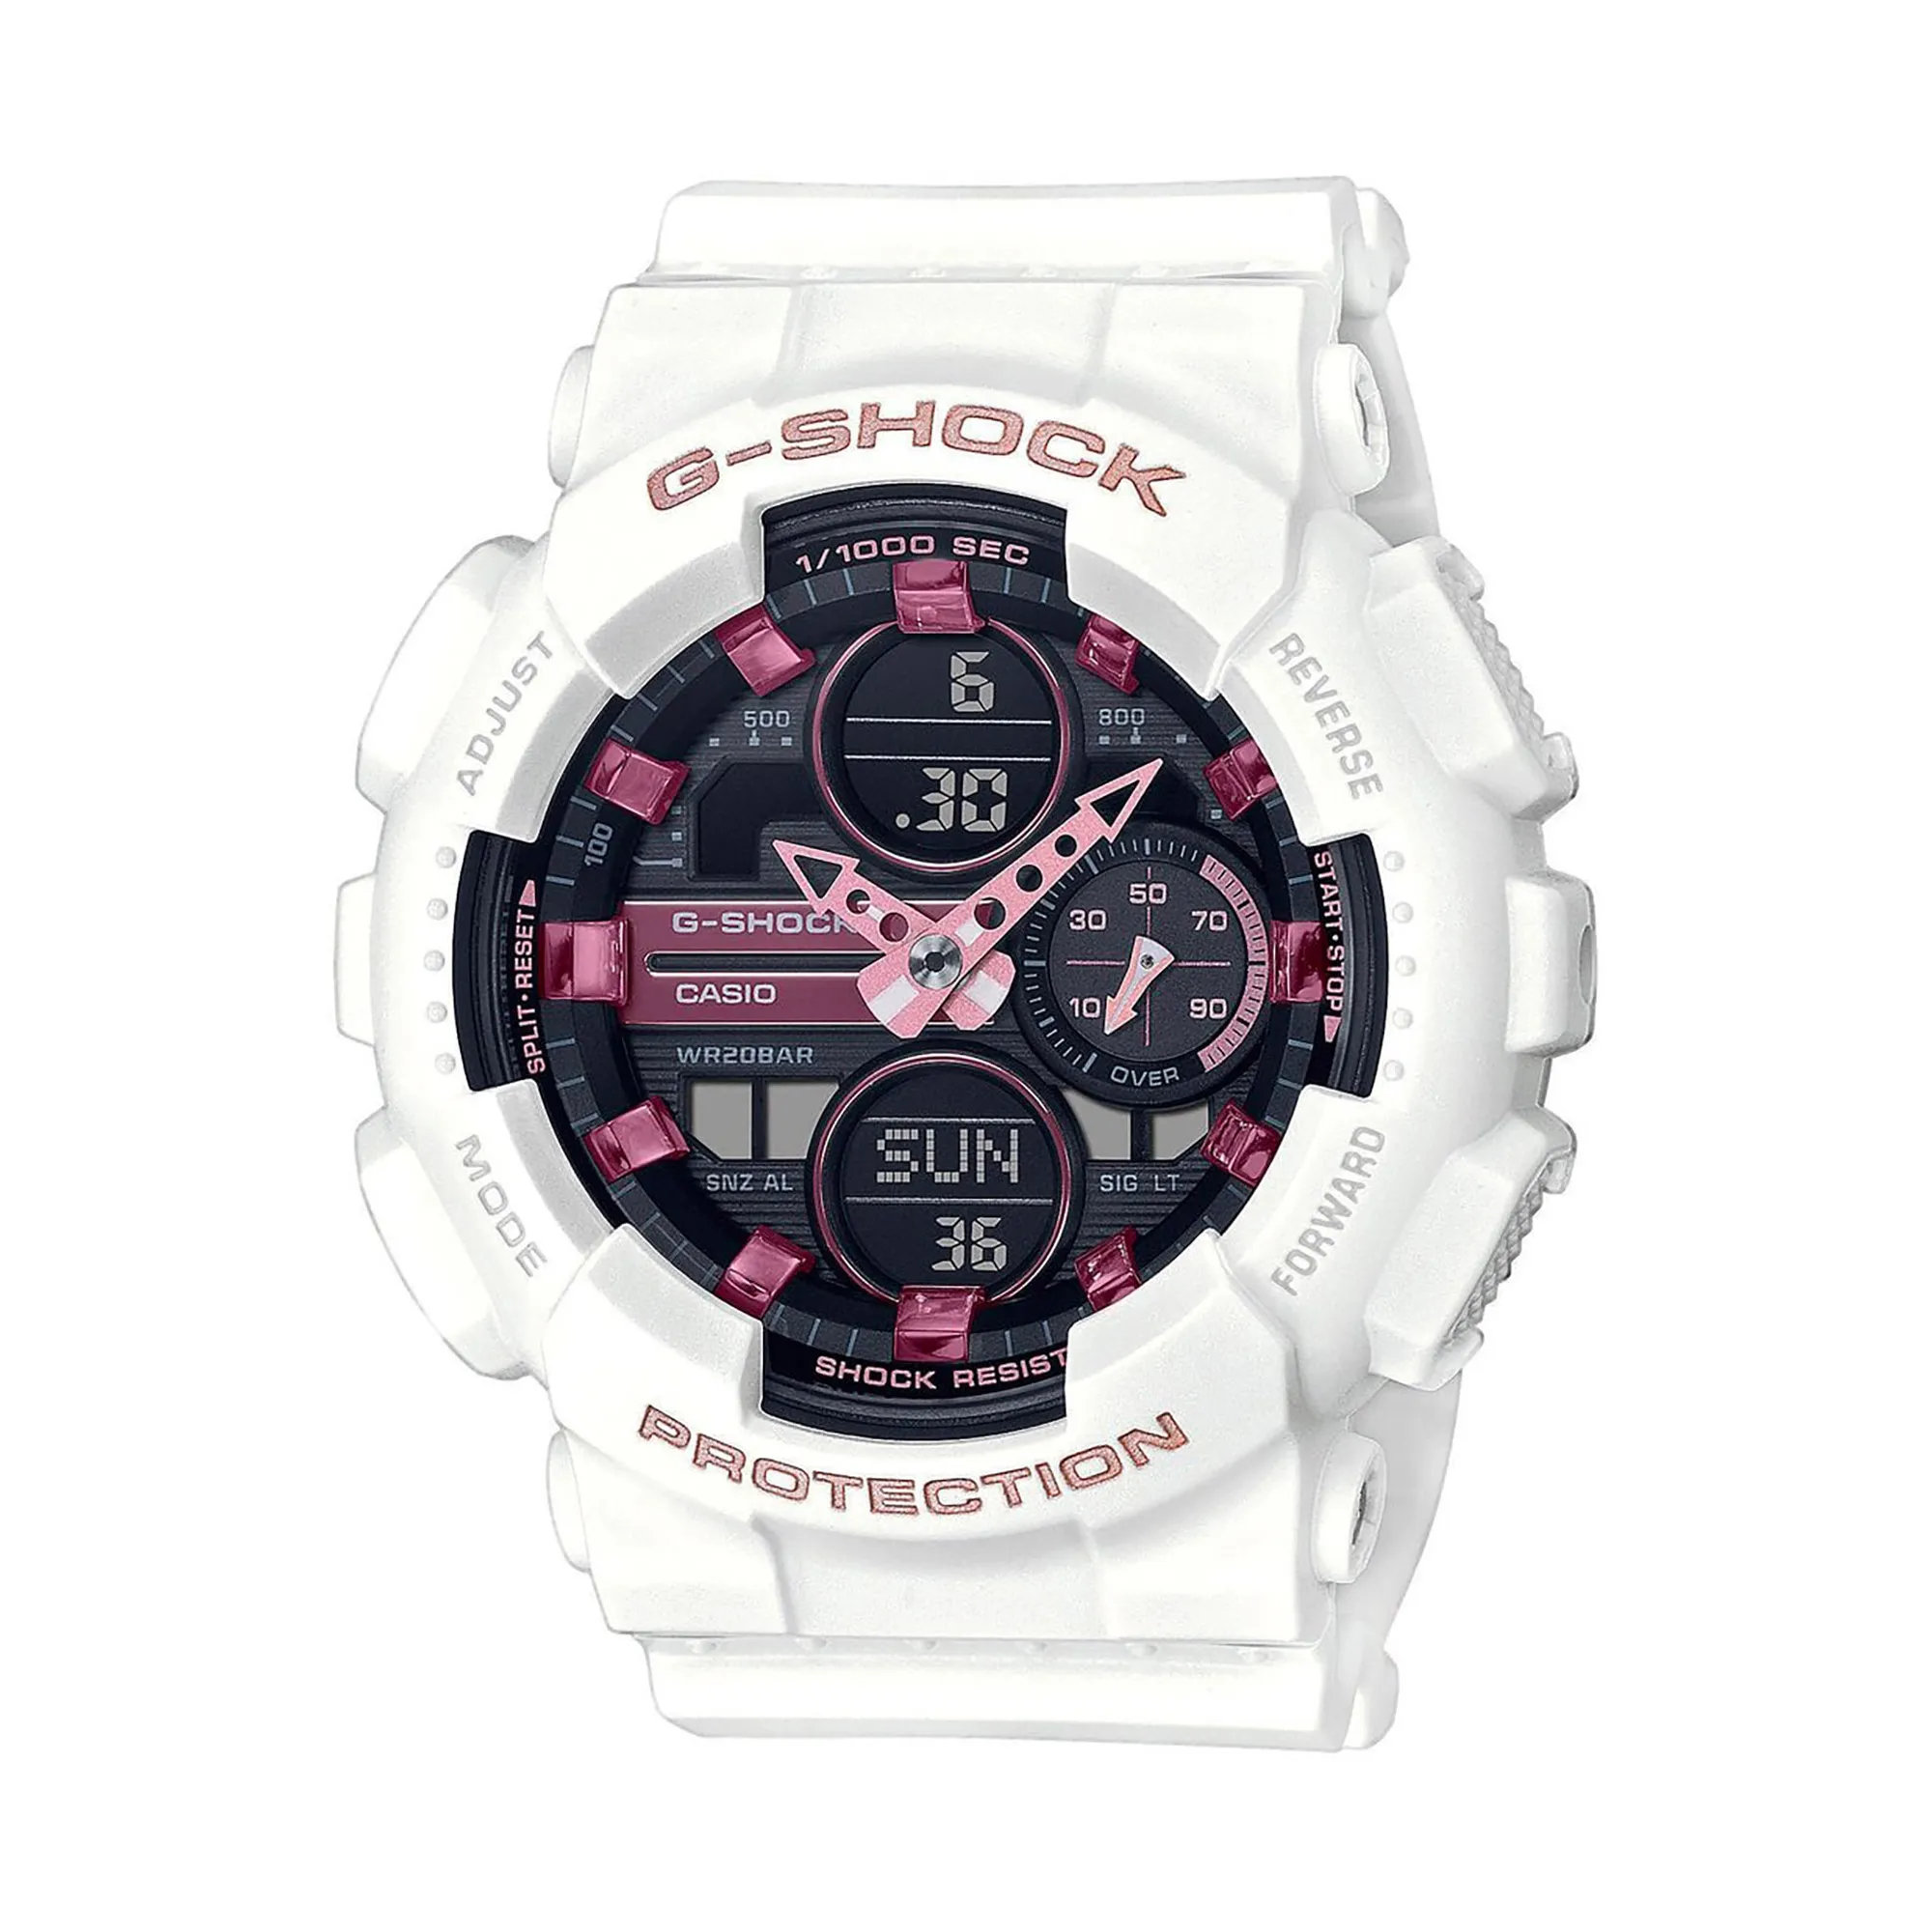 Watch CASIO G-Shock gma-s140m-7aer